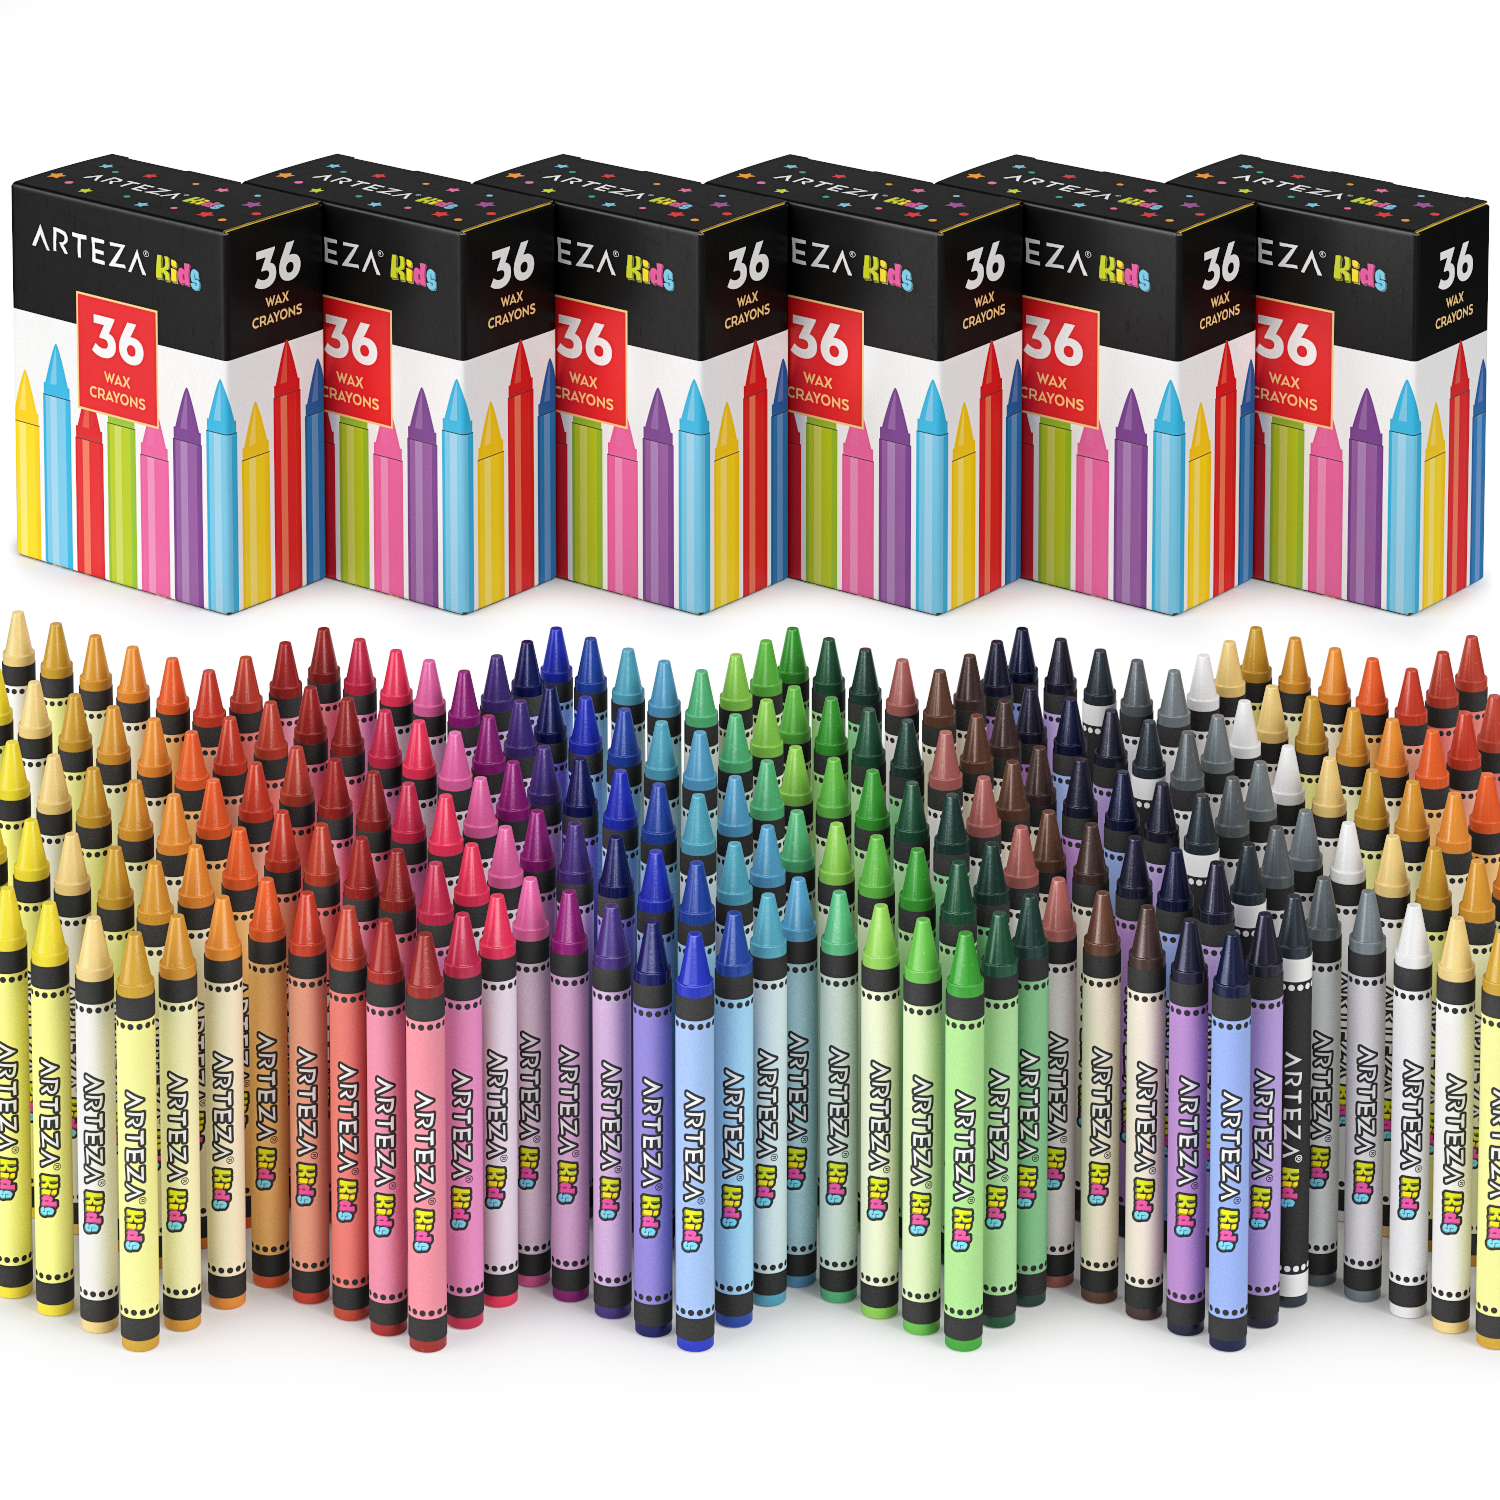 NEW Crayola Colored Pencils , Crayons, and Markers combo art set 3pk Bundle